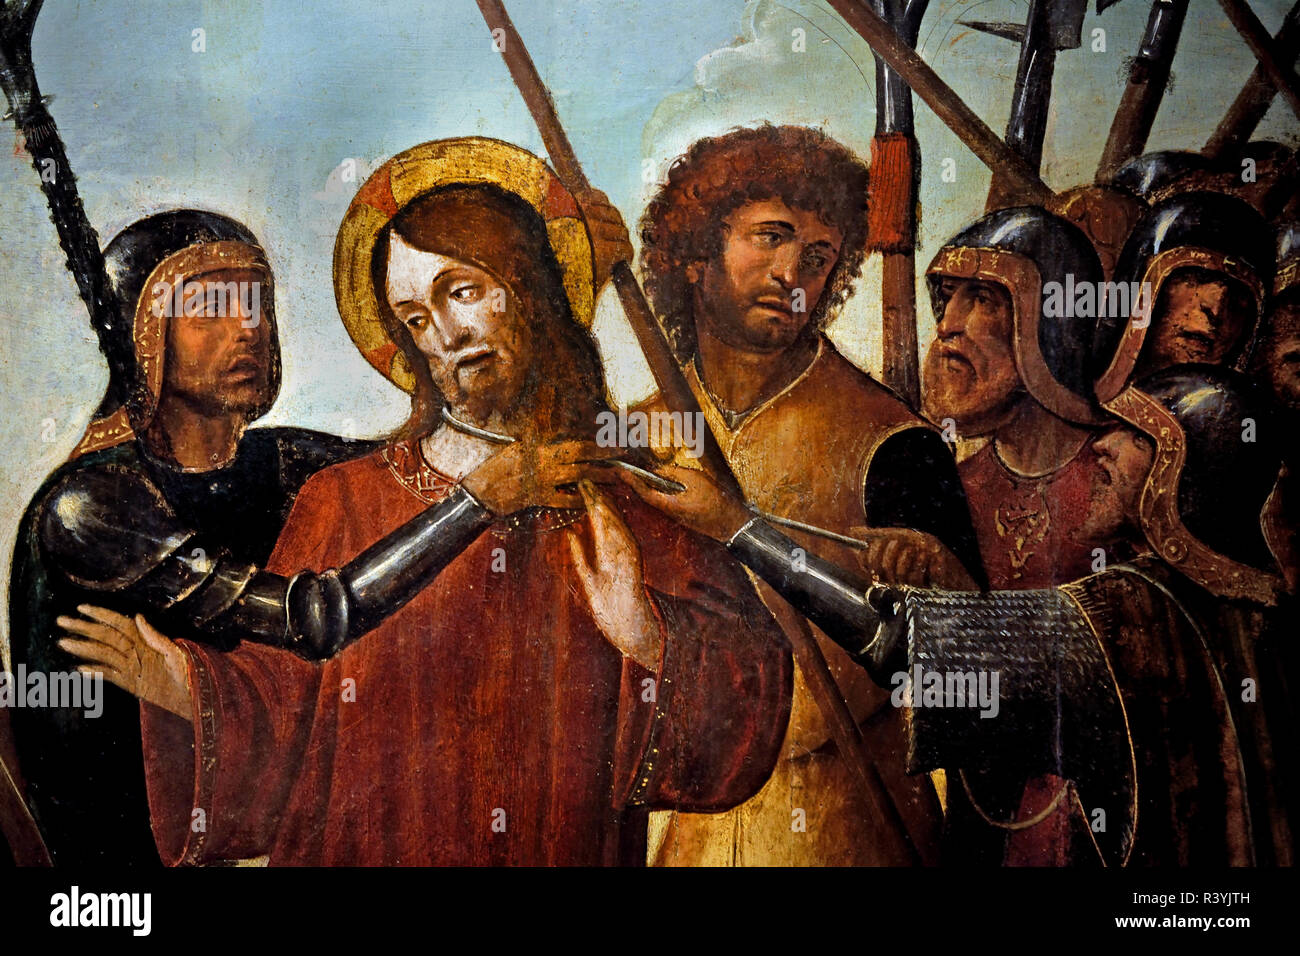 Di Cristo - Téléchargements gratuits de capture de Christ par Baldassarre Carrari (1460-1516) l'Italie, l'italien. Banque D'Images